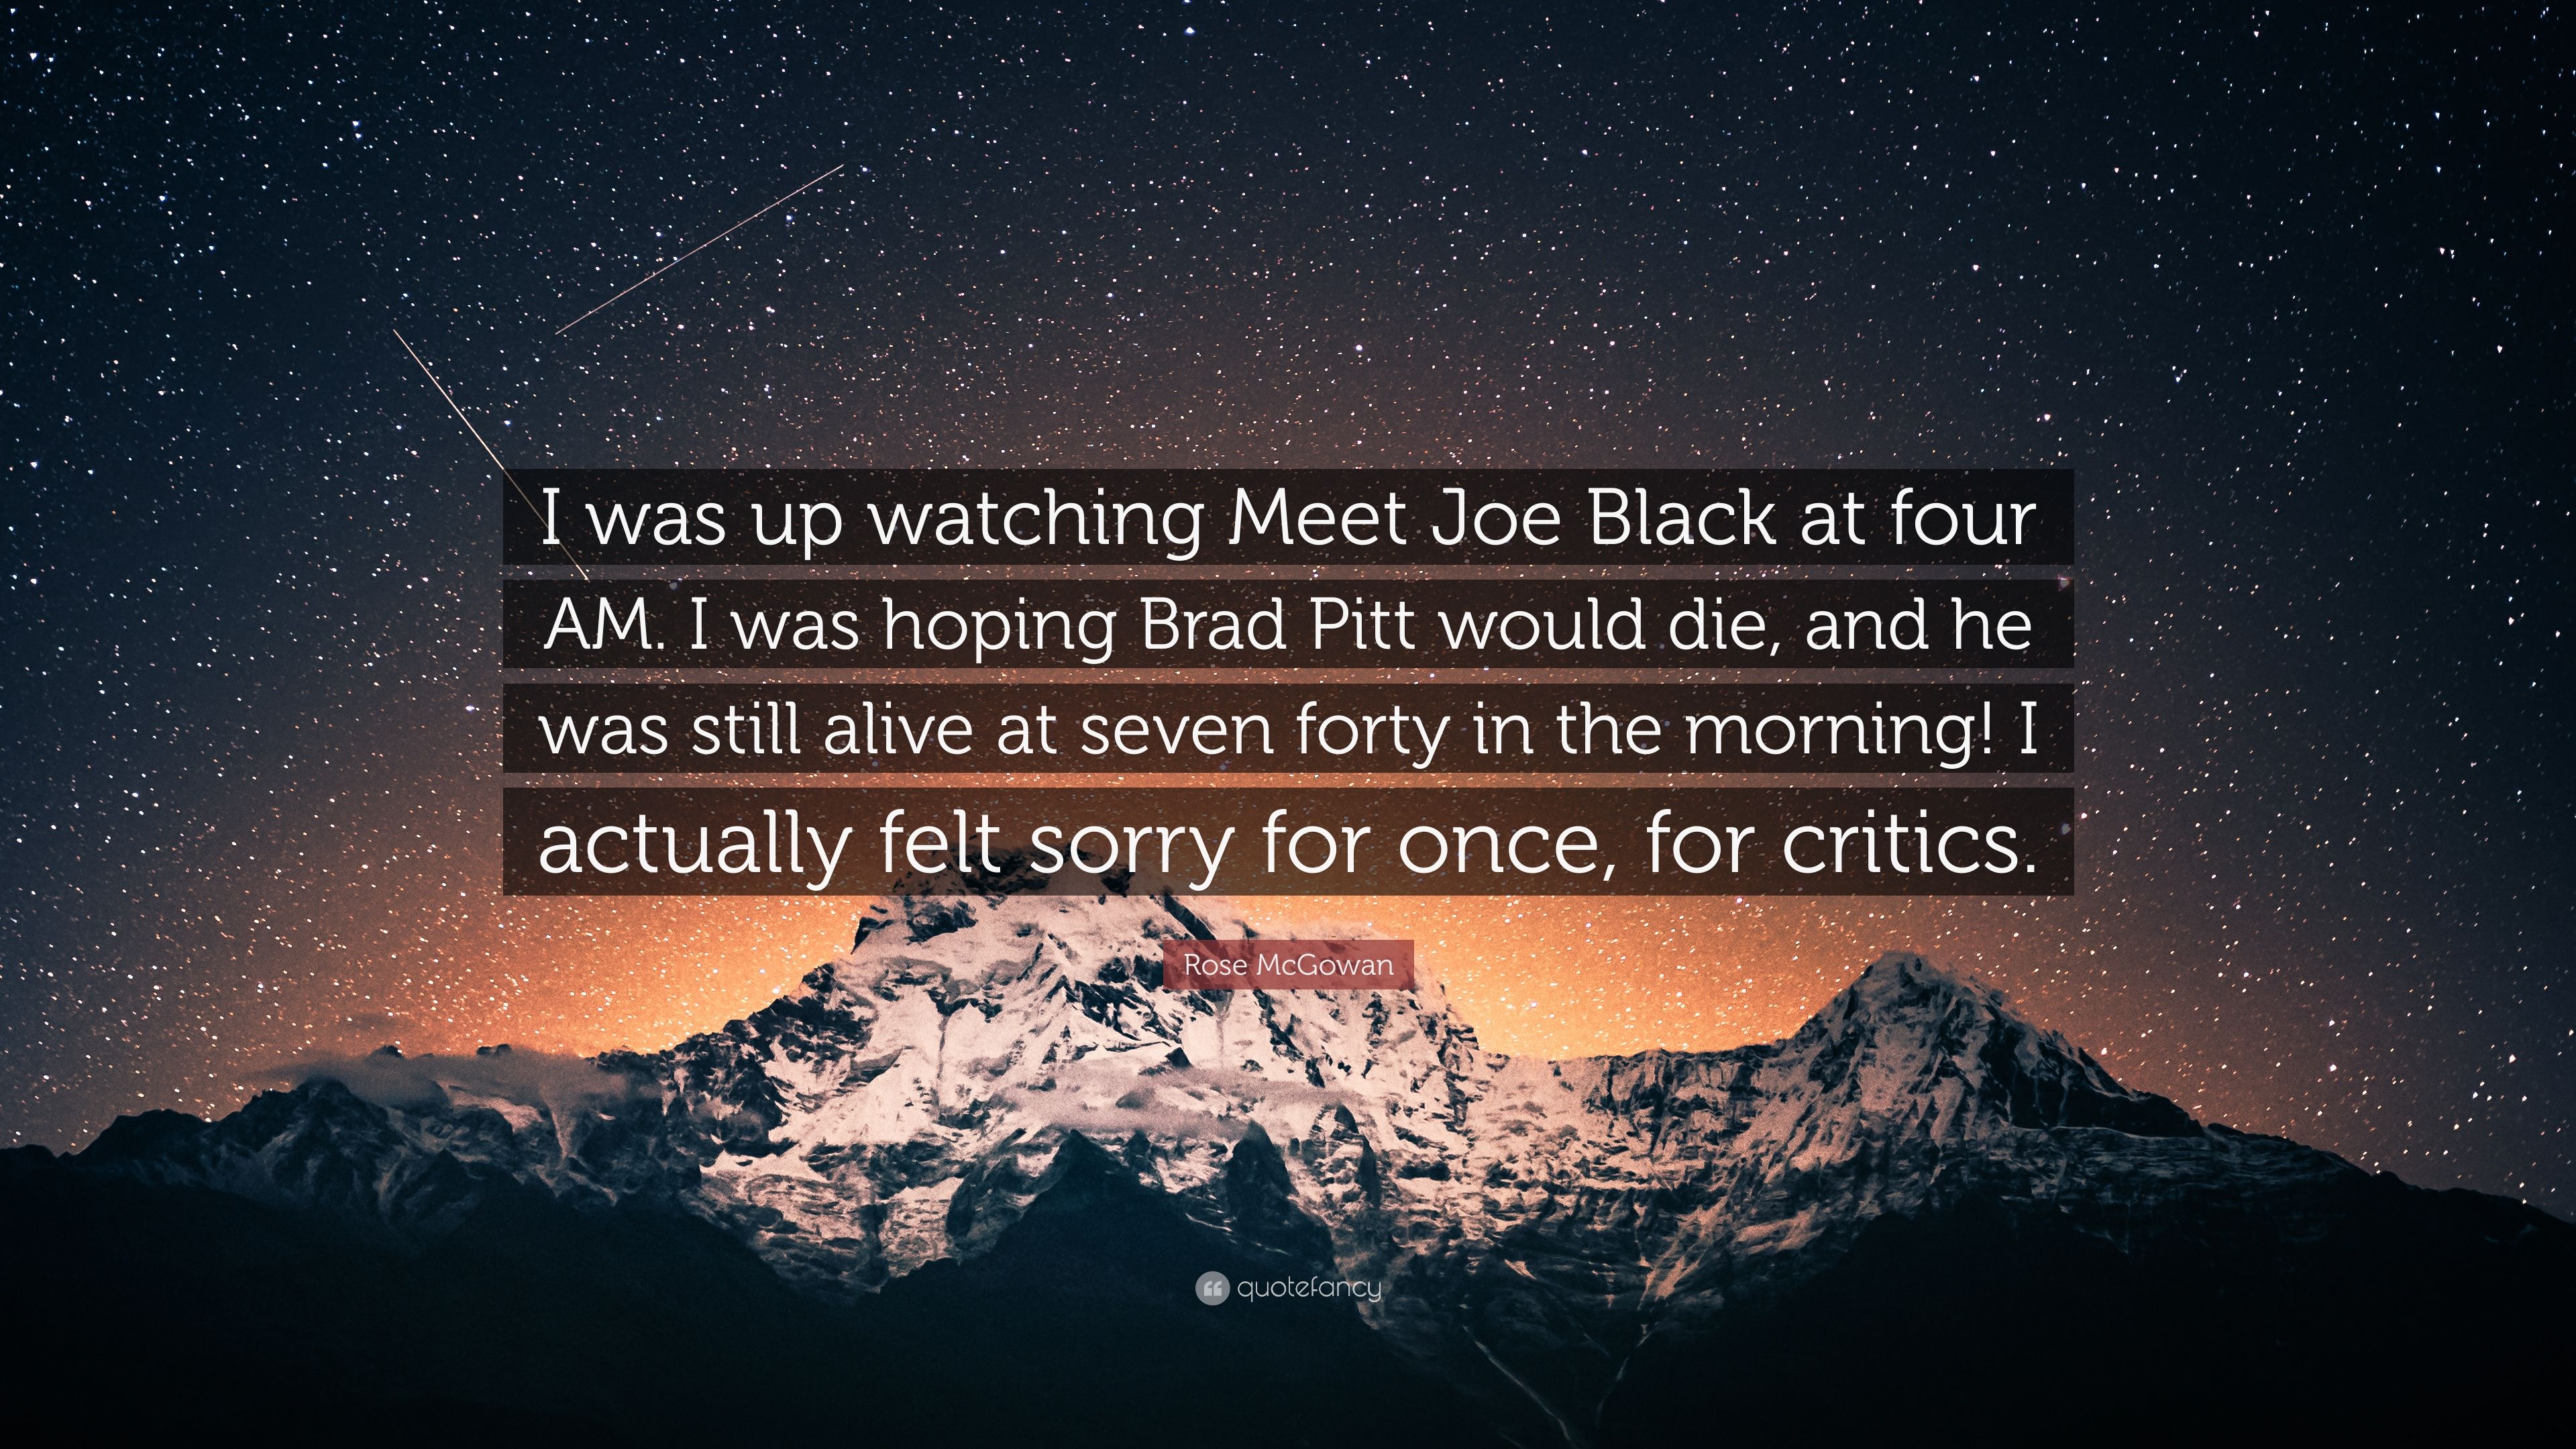 Rose McGowan Quote: “I was up watching Meet Joe Black at